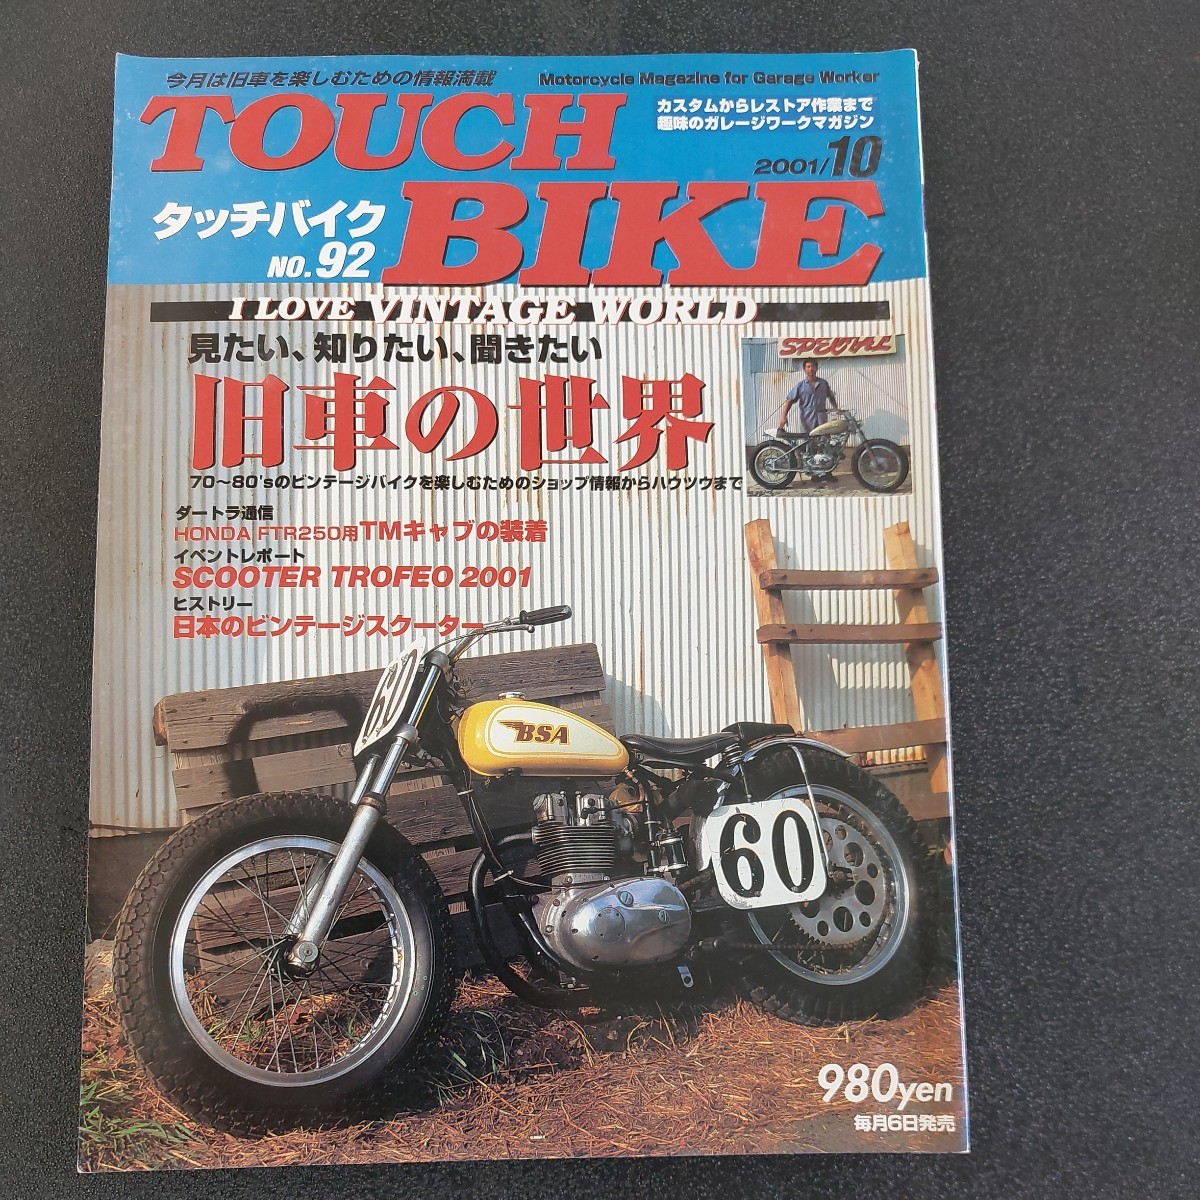 * Touch мотоцикл No.92 2001 год 10 месяц номер старый автомобиль мир *